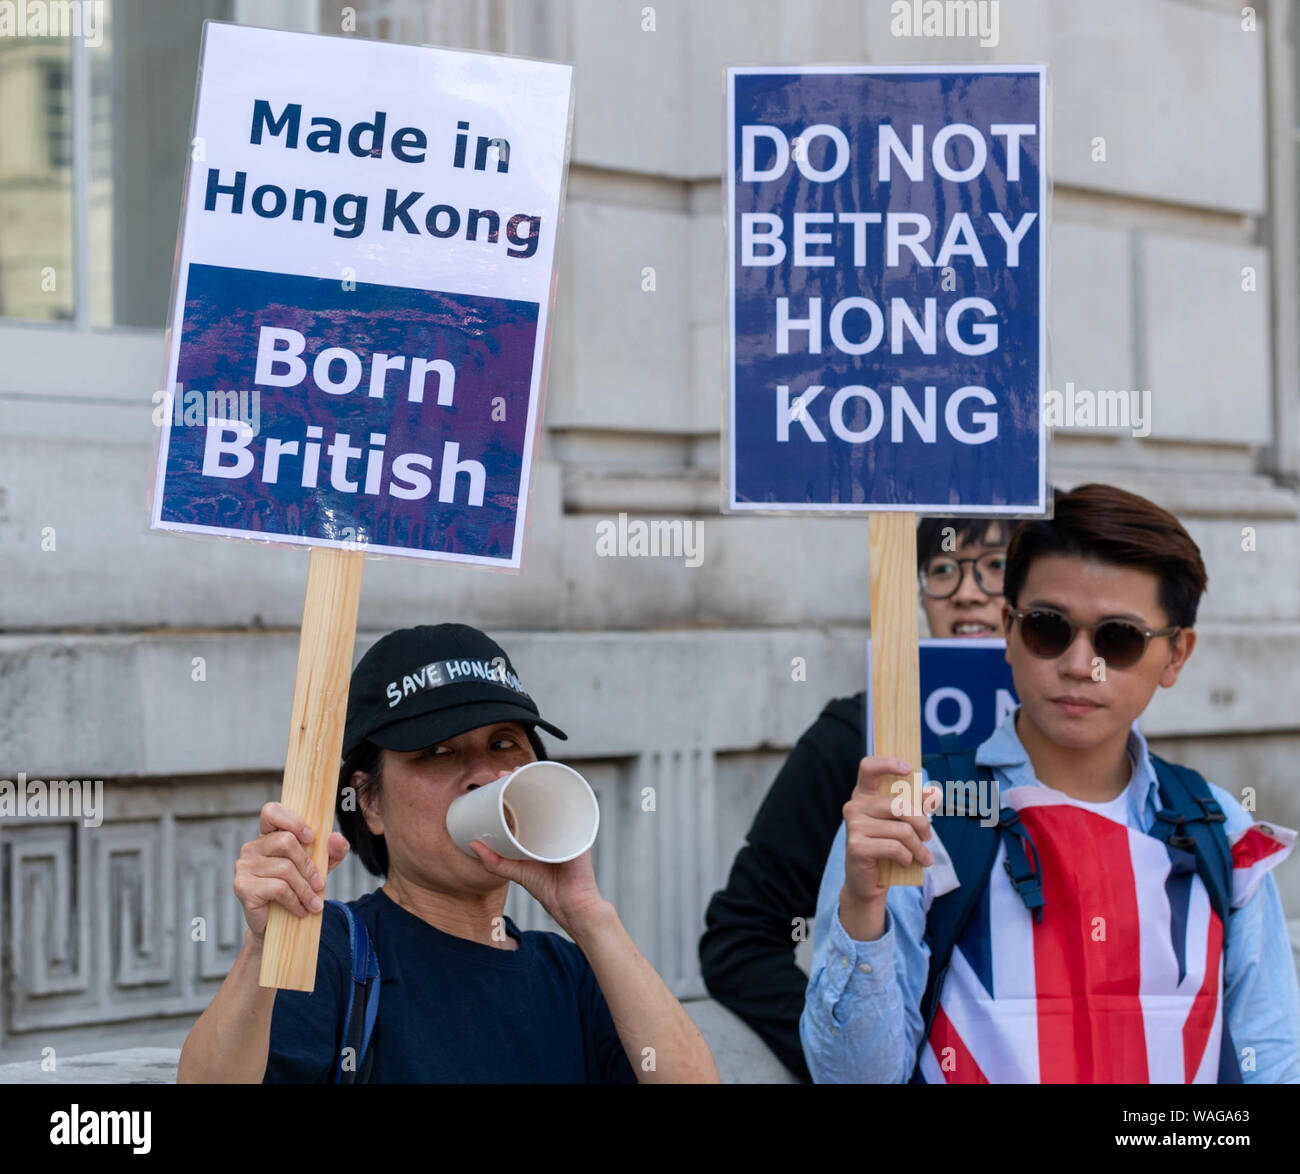 London, 20. August 2019 Pro Demokratie Hong Kong Demonstranten außerhalb des Cabinet Office in Whitehall London Credit Ian DavidsonAlamy leben Nachrichten Stockfoto